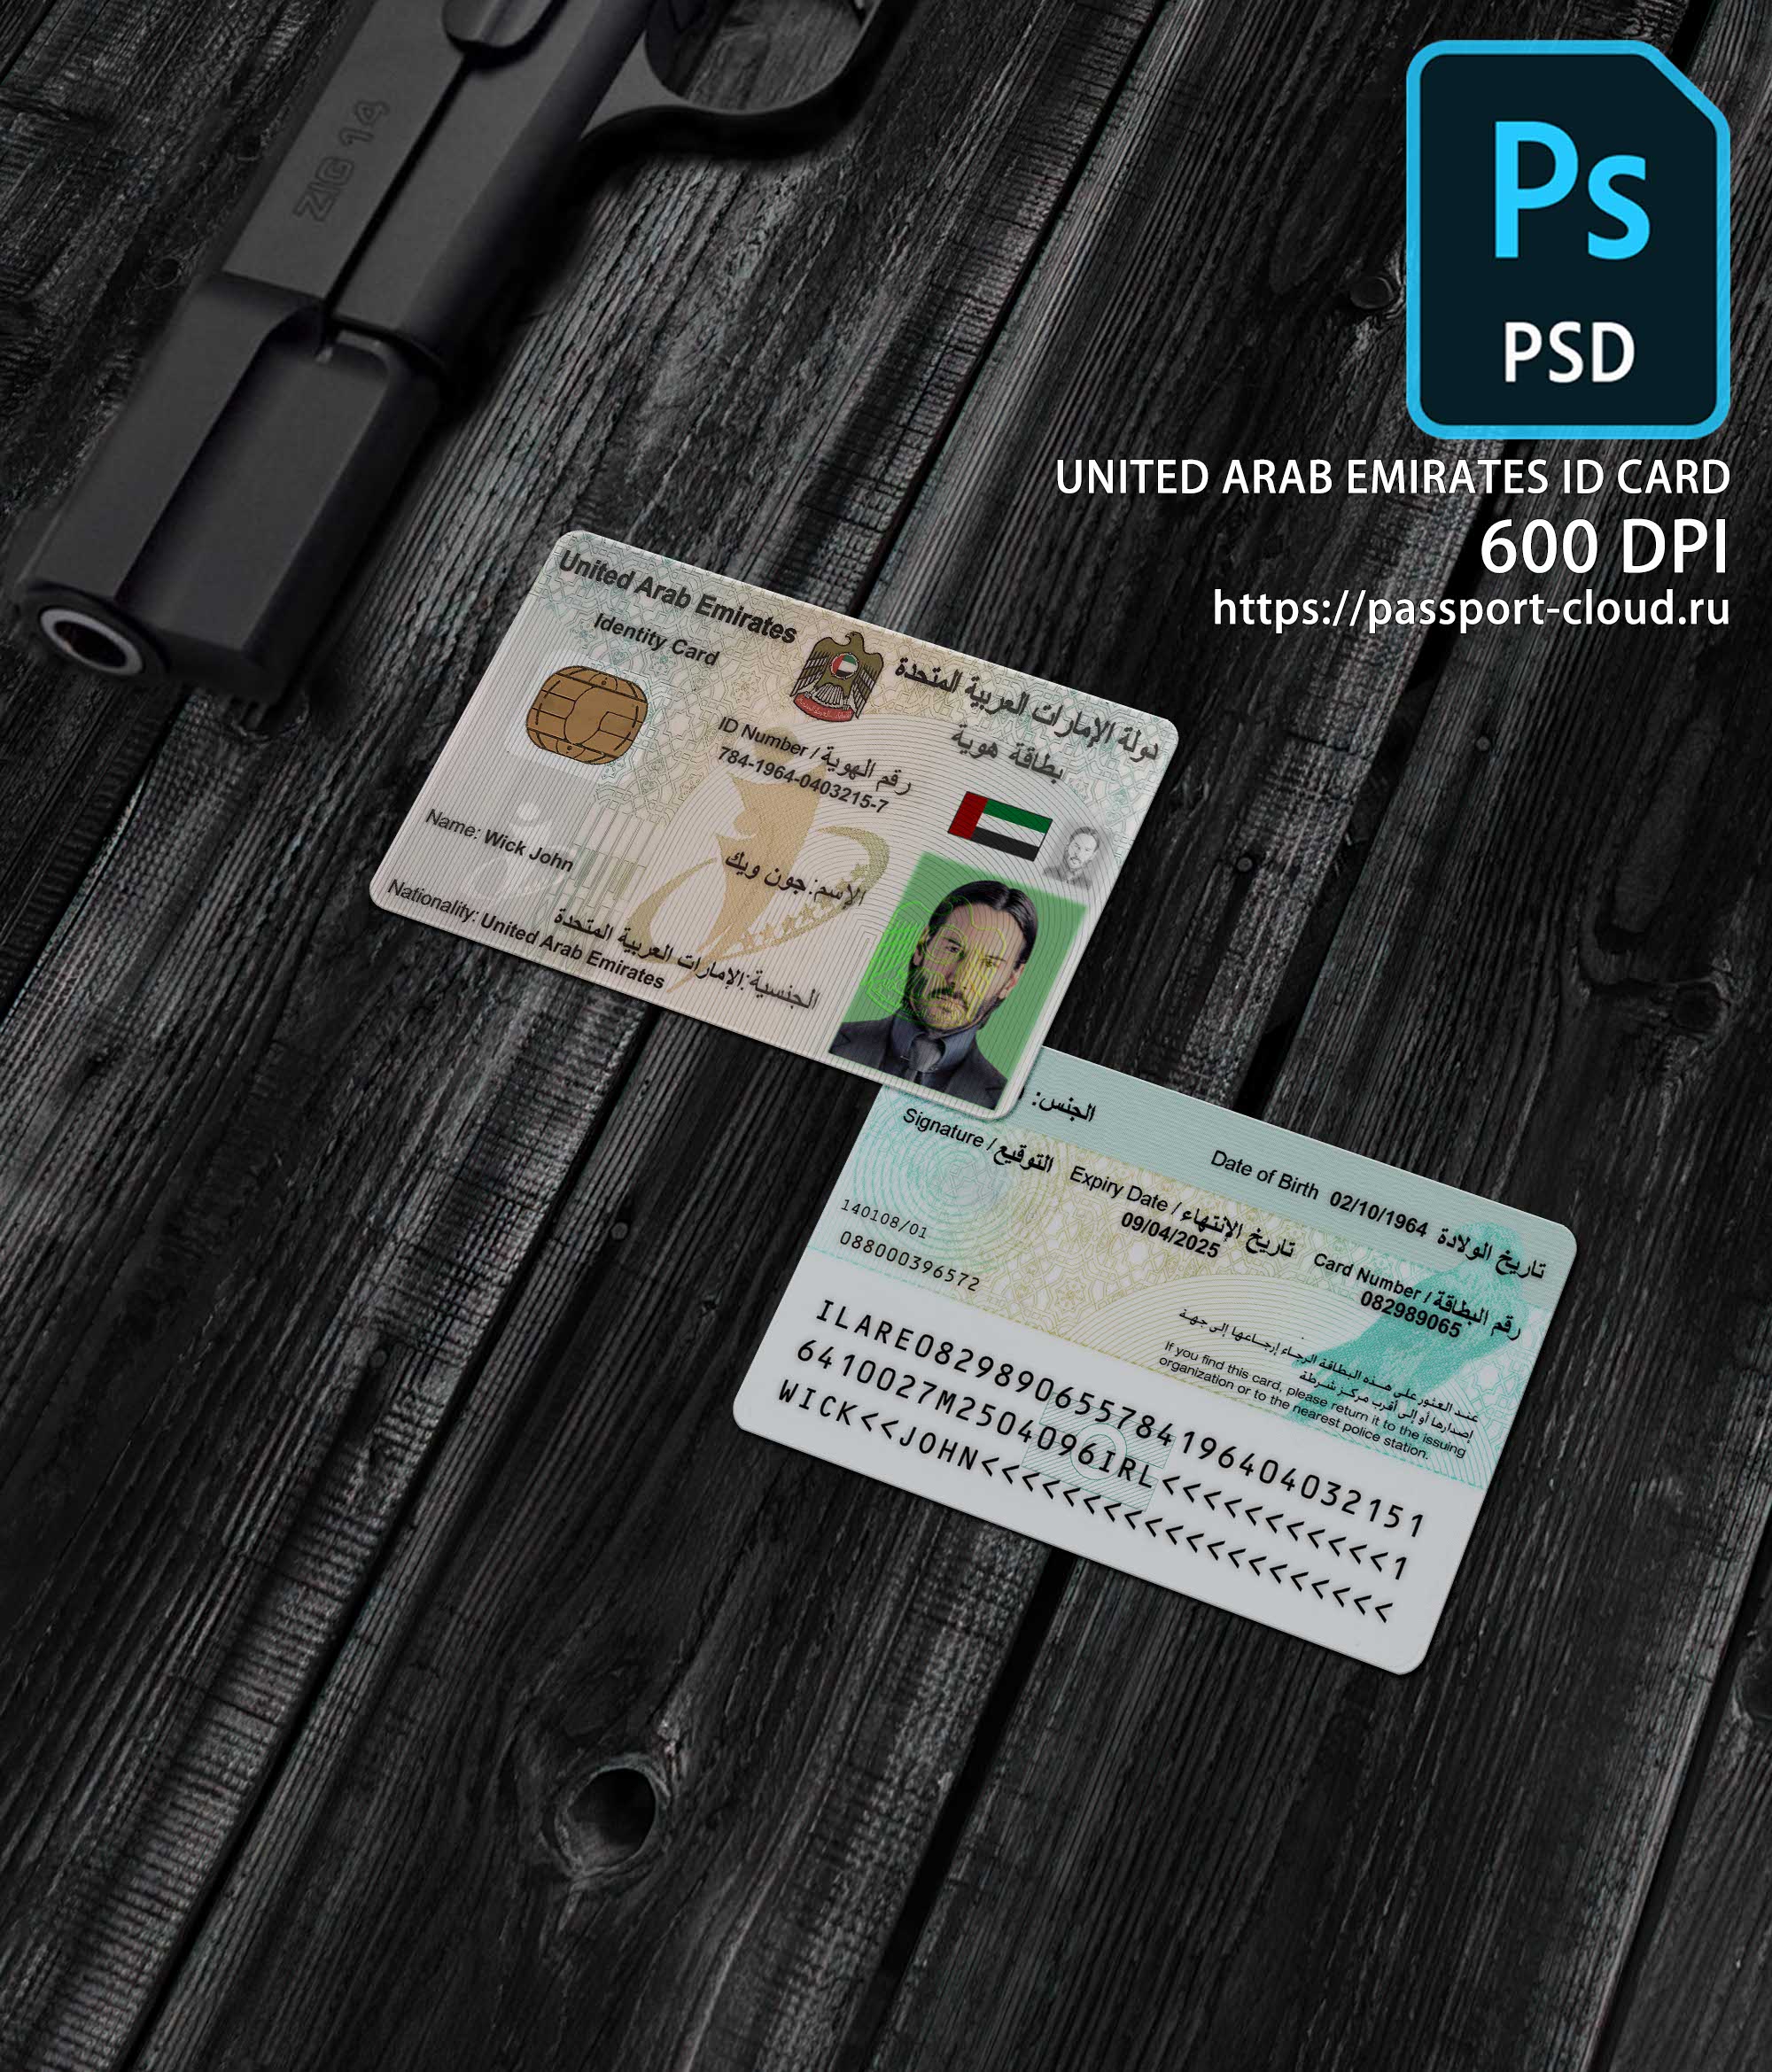 United Arab Emirates ID Card 2011+ PSD1